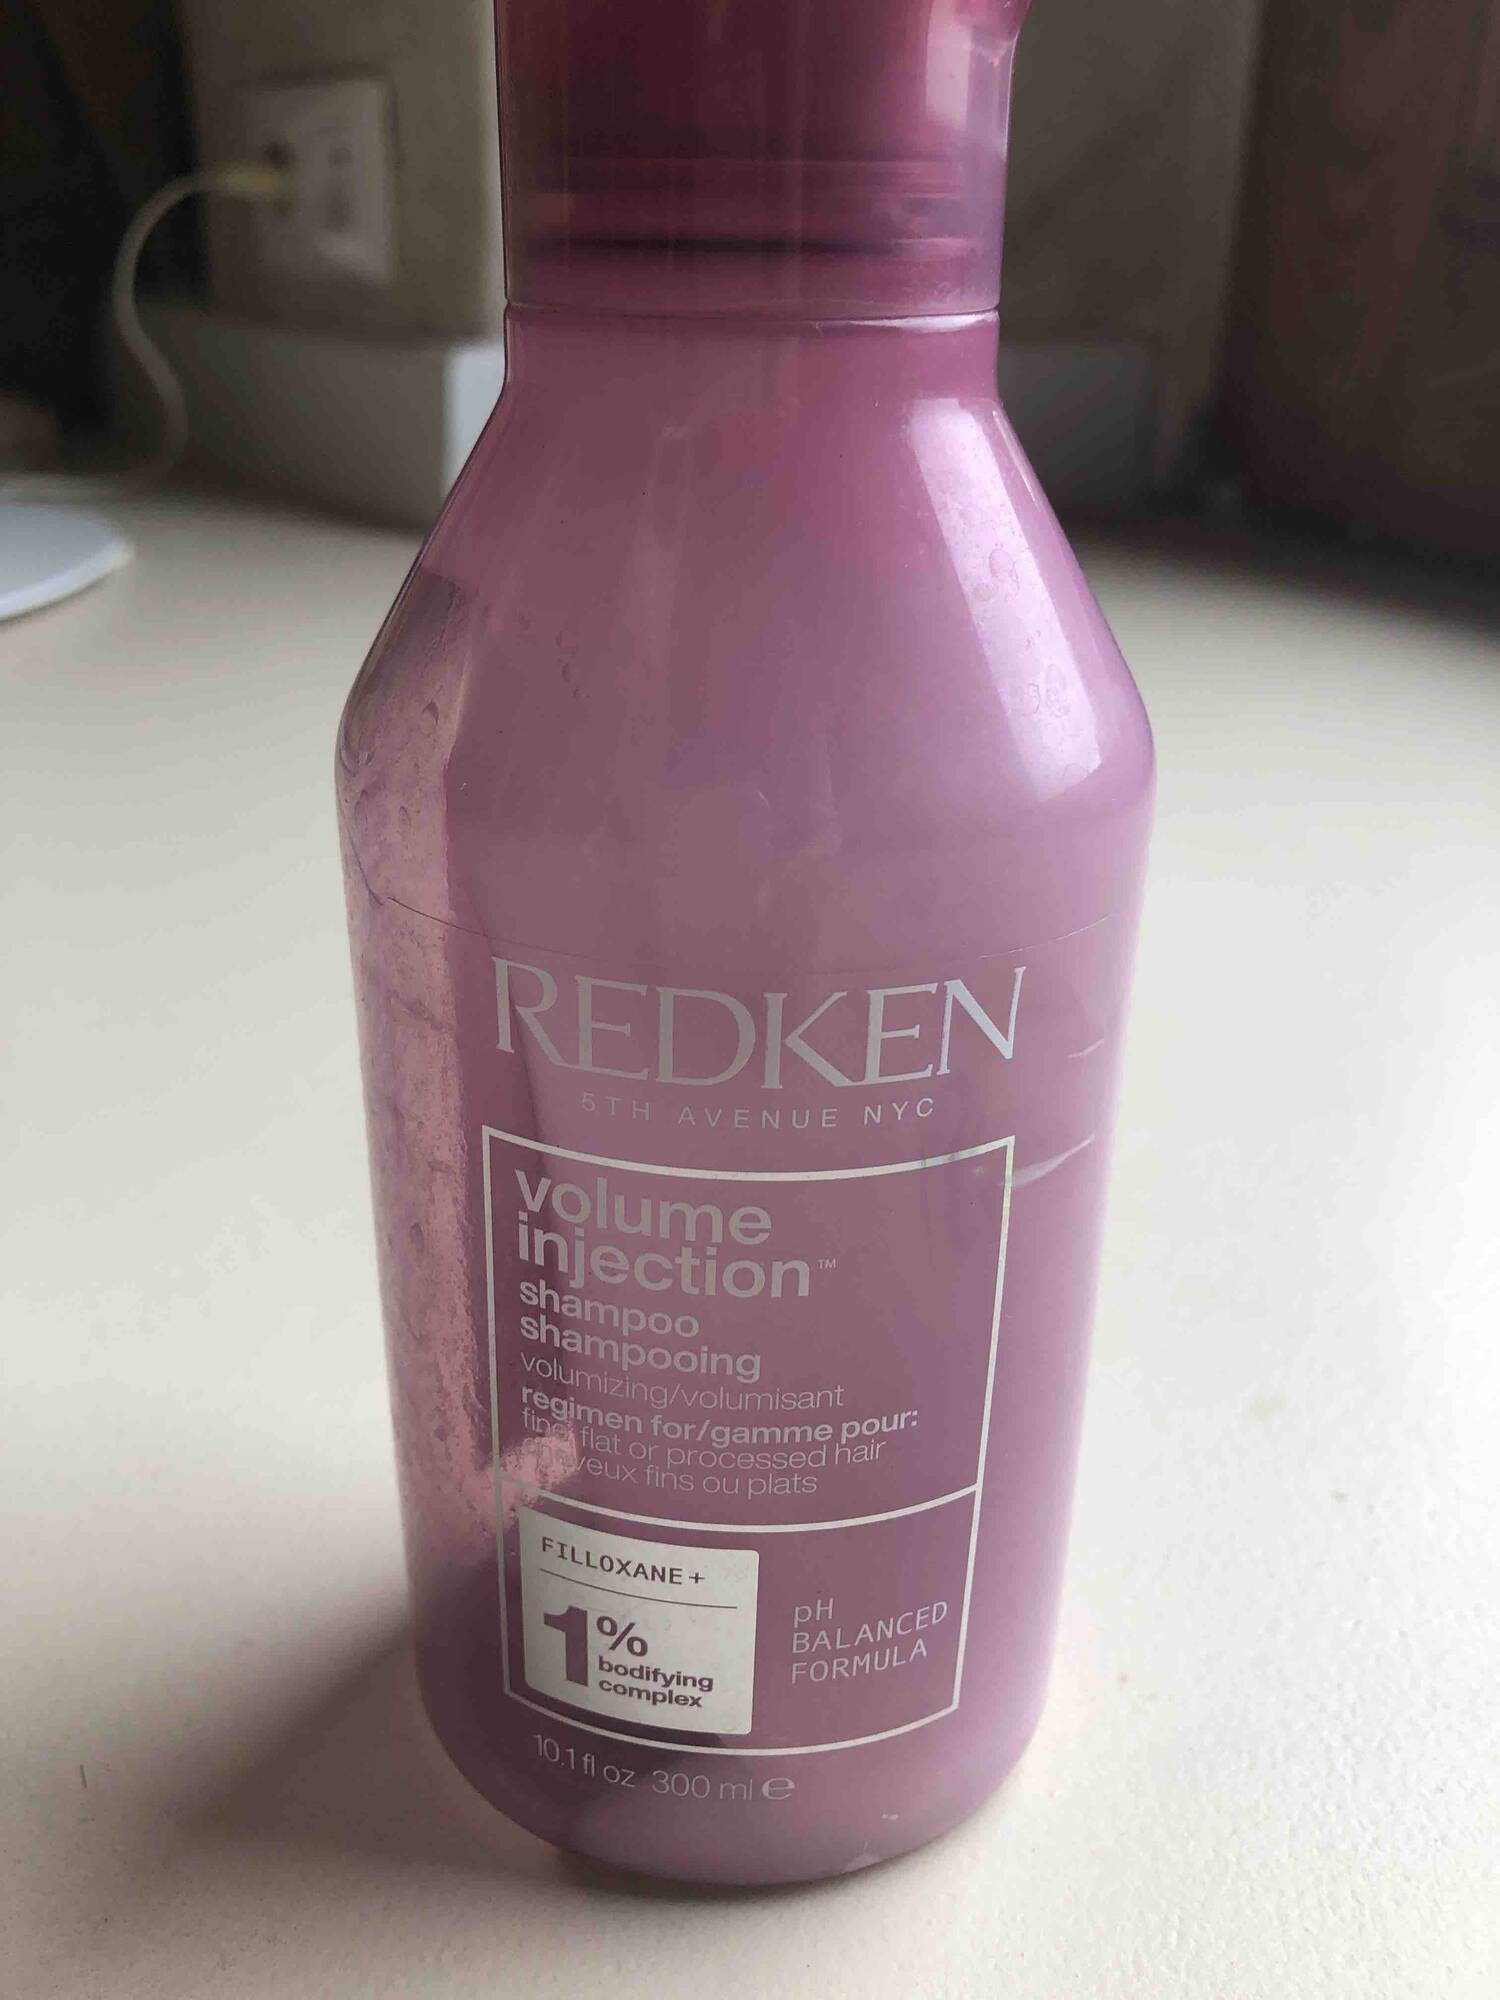 REDKEN - Volume injection - Shampooing volumisant